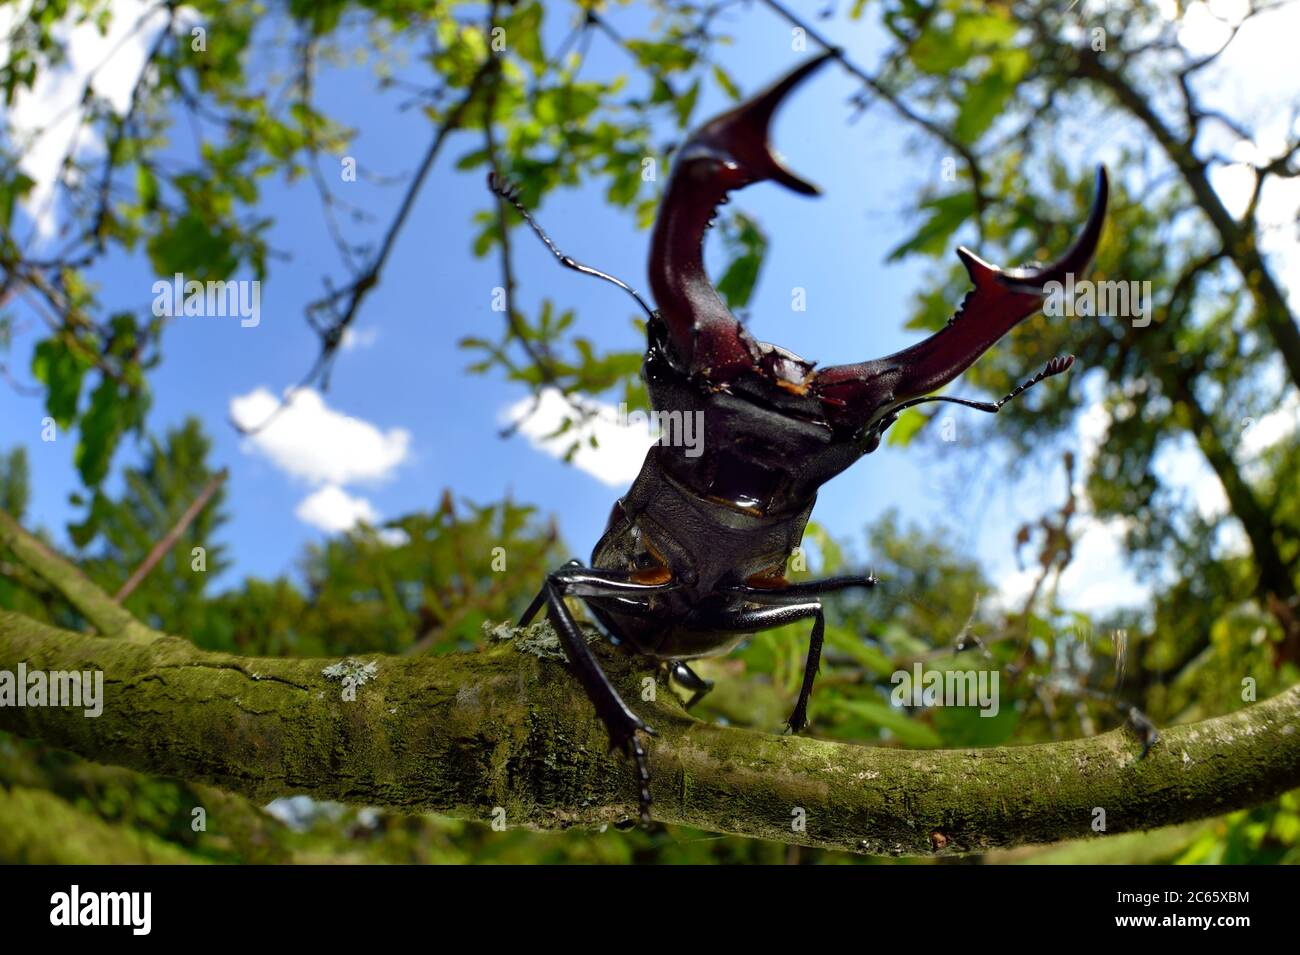 Rivals Stag beetle (Lucanus cervus) two males displaying aggressive behaviour on oak tree branch, Biosphere Reserve 'Niedersächsische Elbtalaue' / Lower Saxonian Elbe Valley, Germany Stock Photo